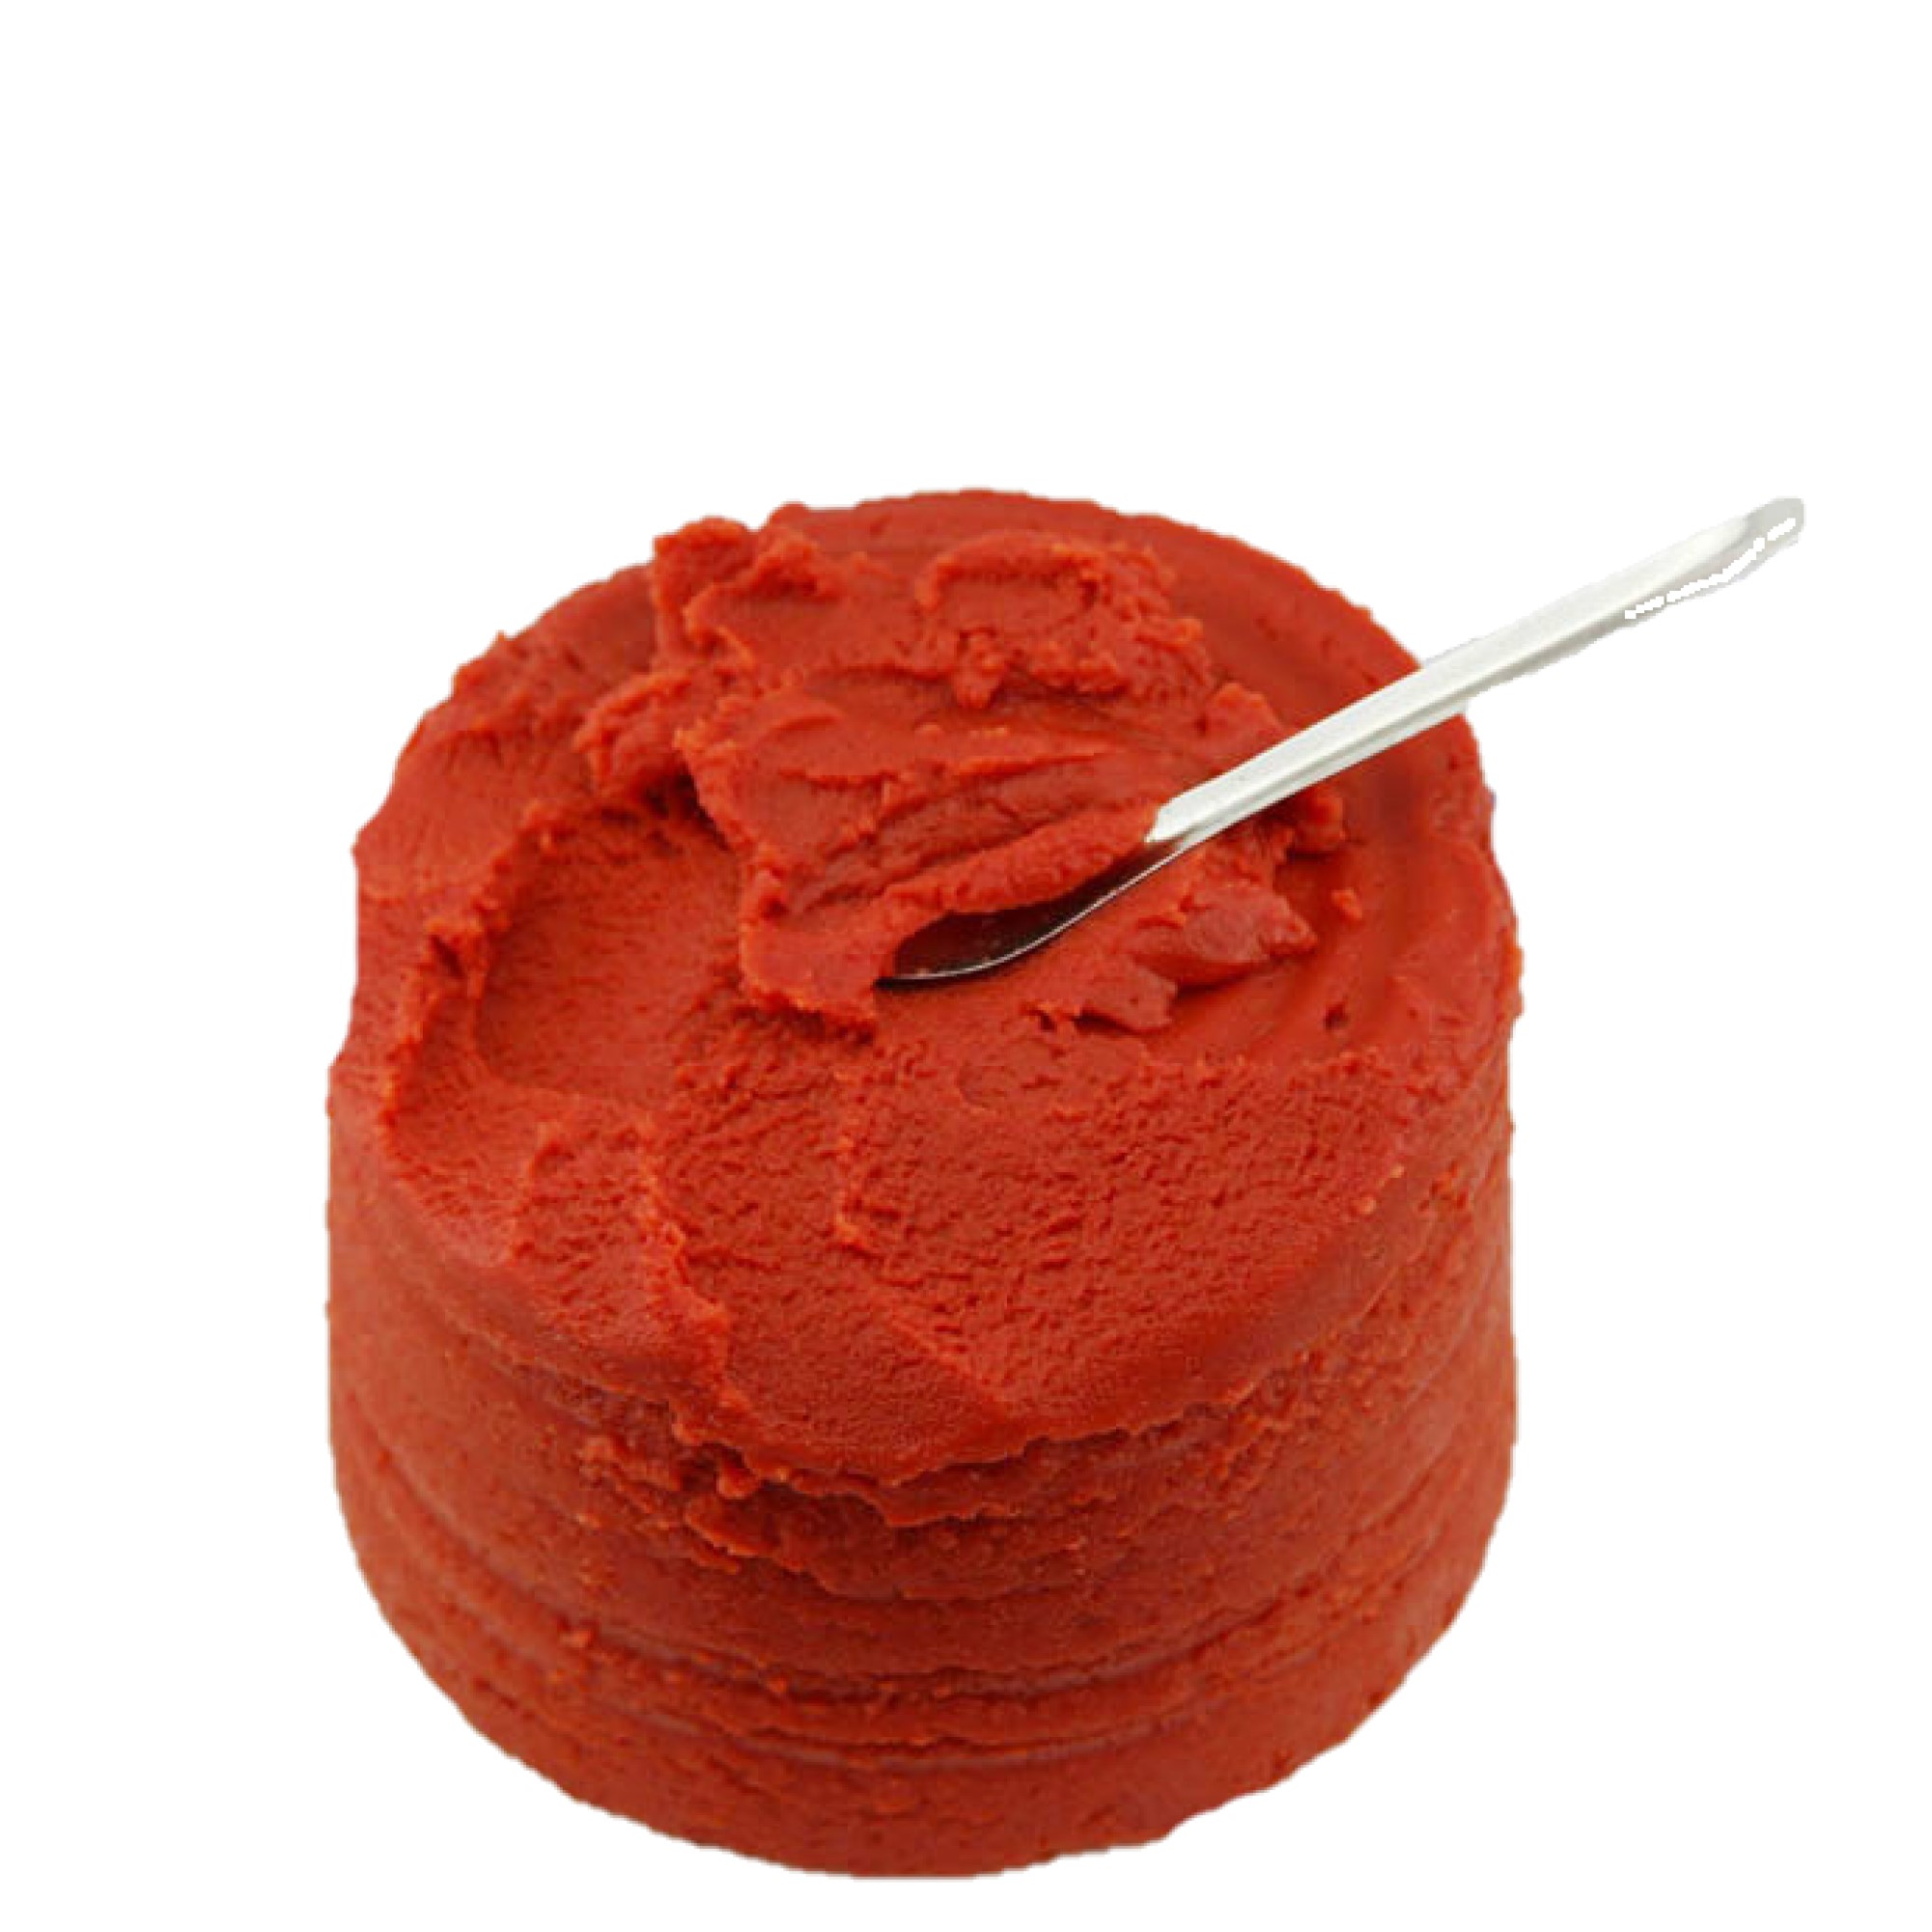 pasta de tomate em lata 2200g 28-30% brix marca GINNY